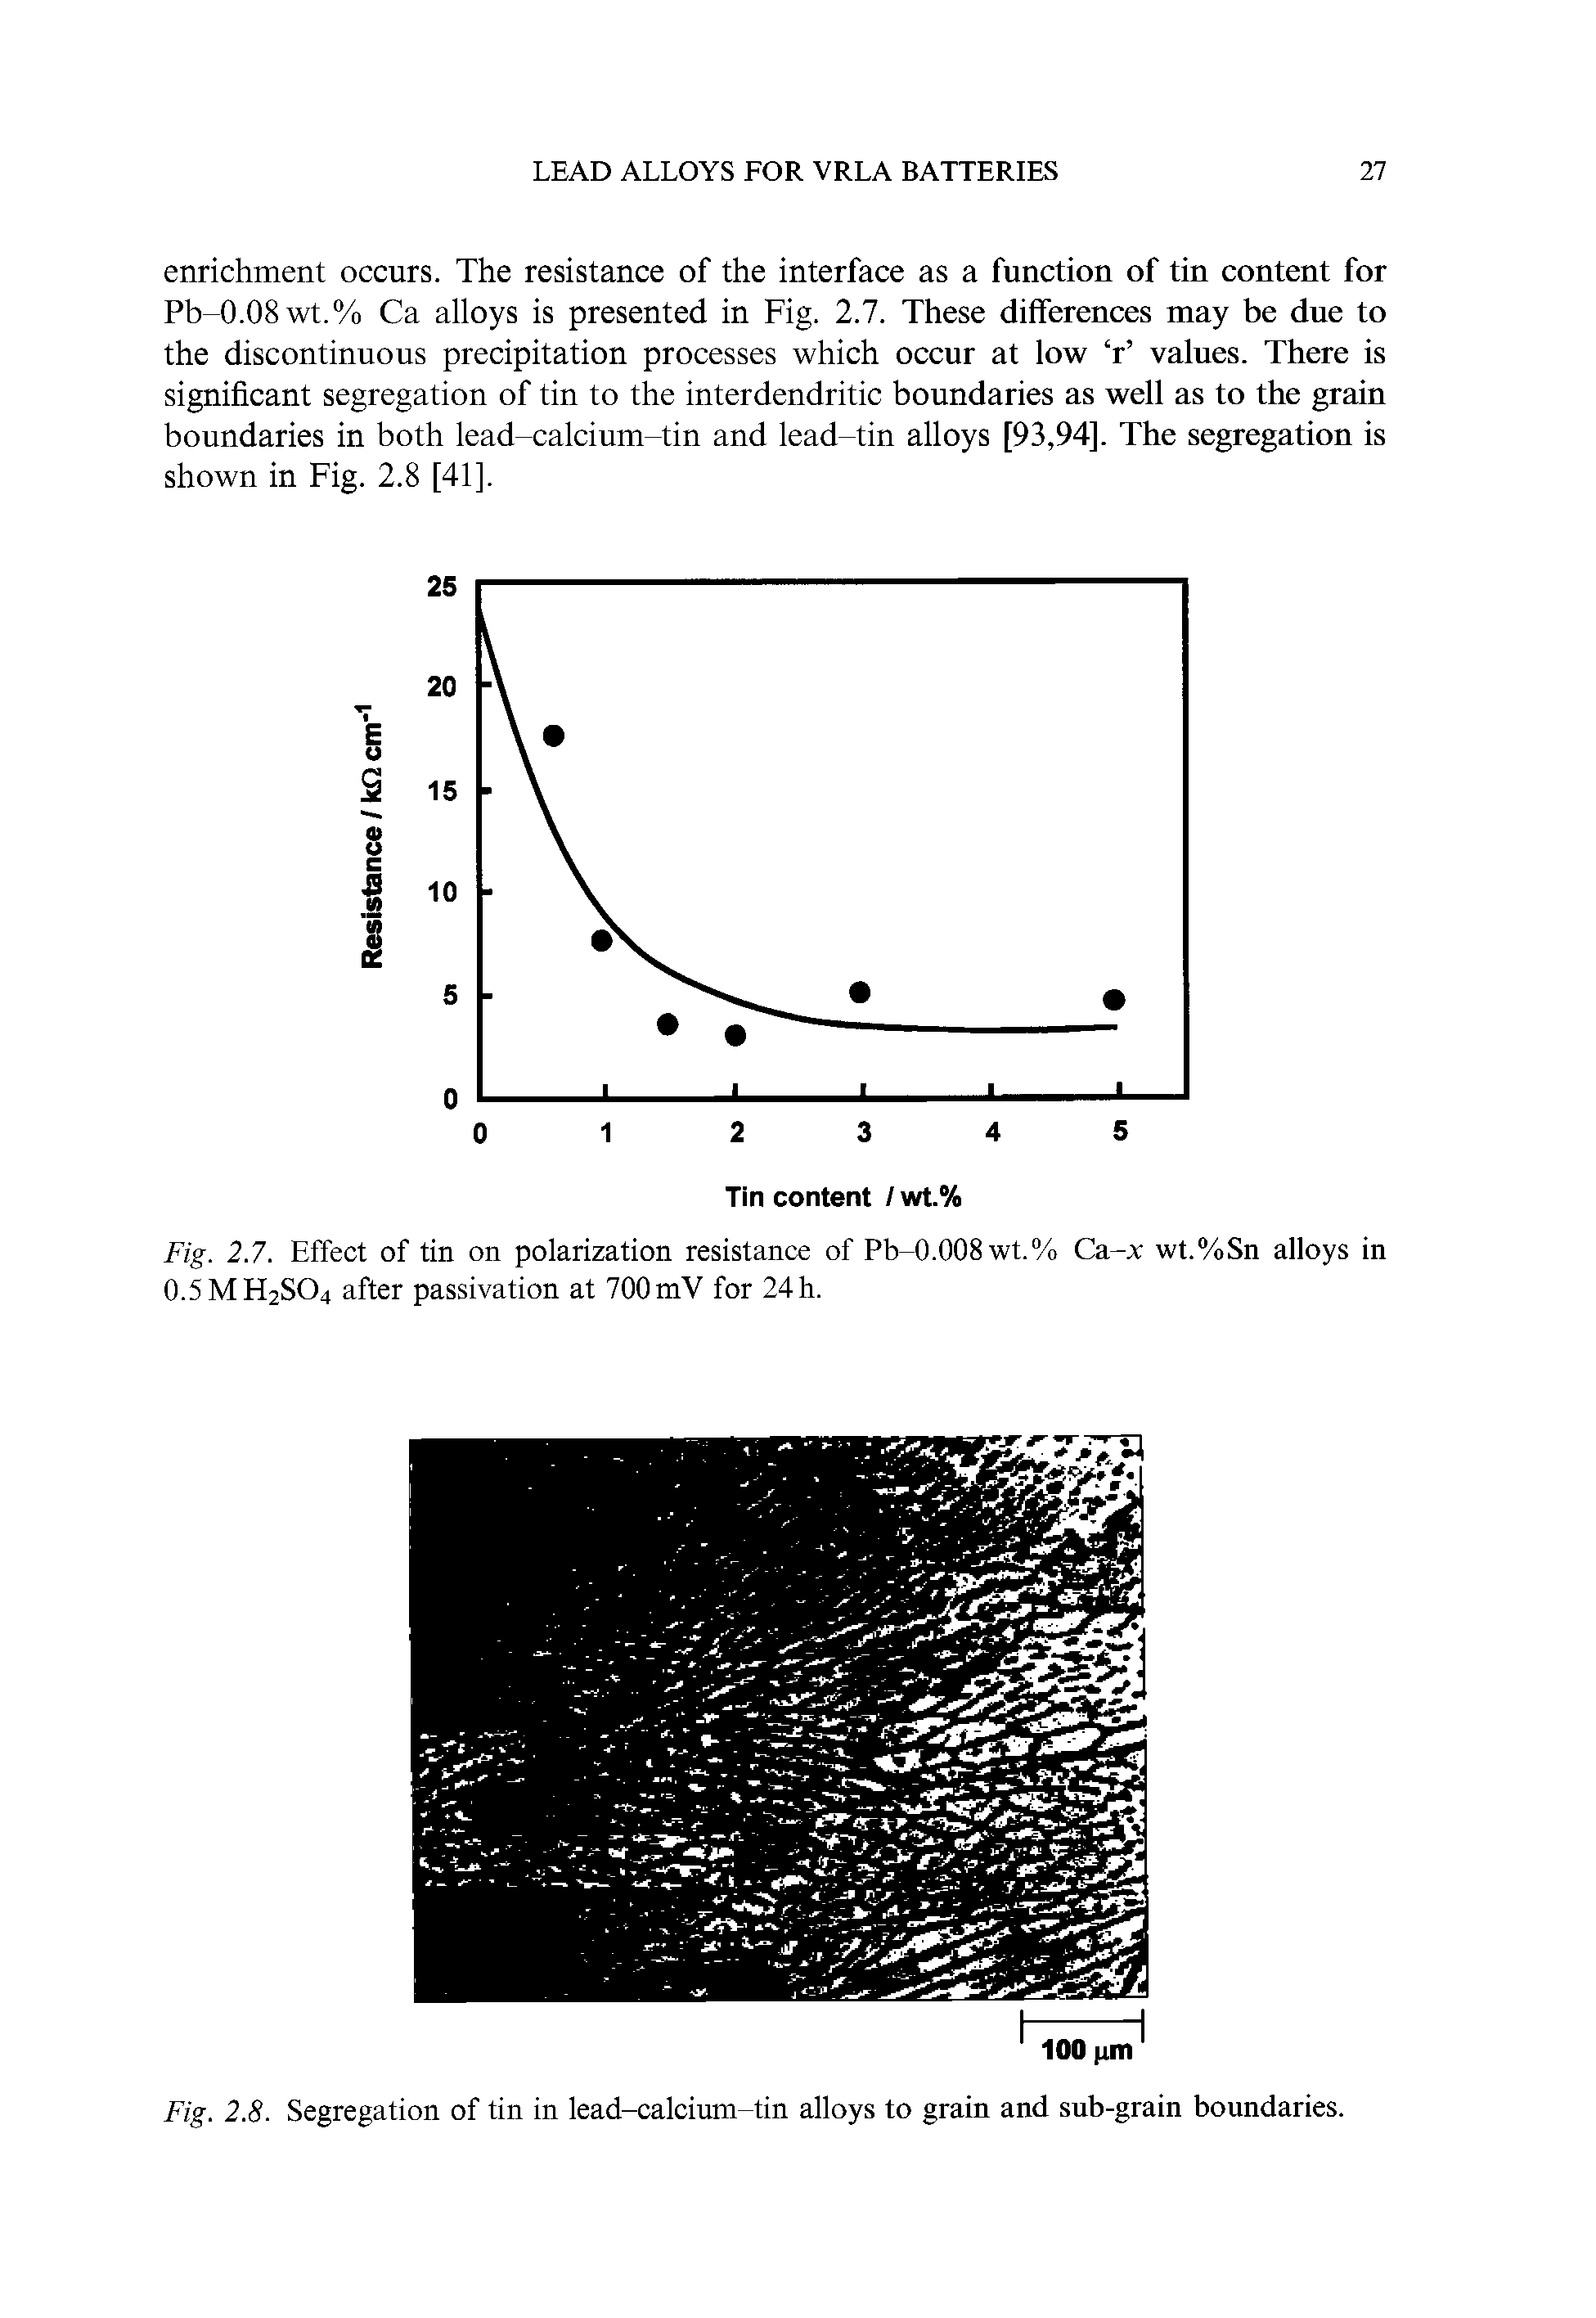 Fig. 2.8. Segregation of tin in lead-calcium-tin alloys to grain and sub-grain boundaries.